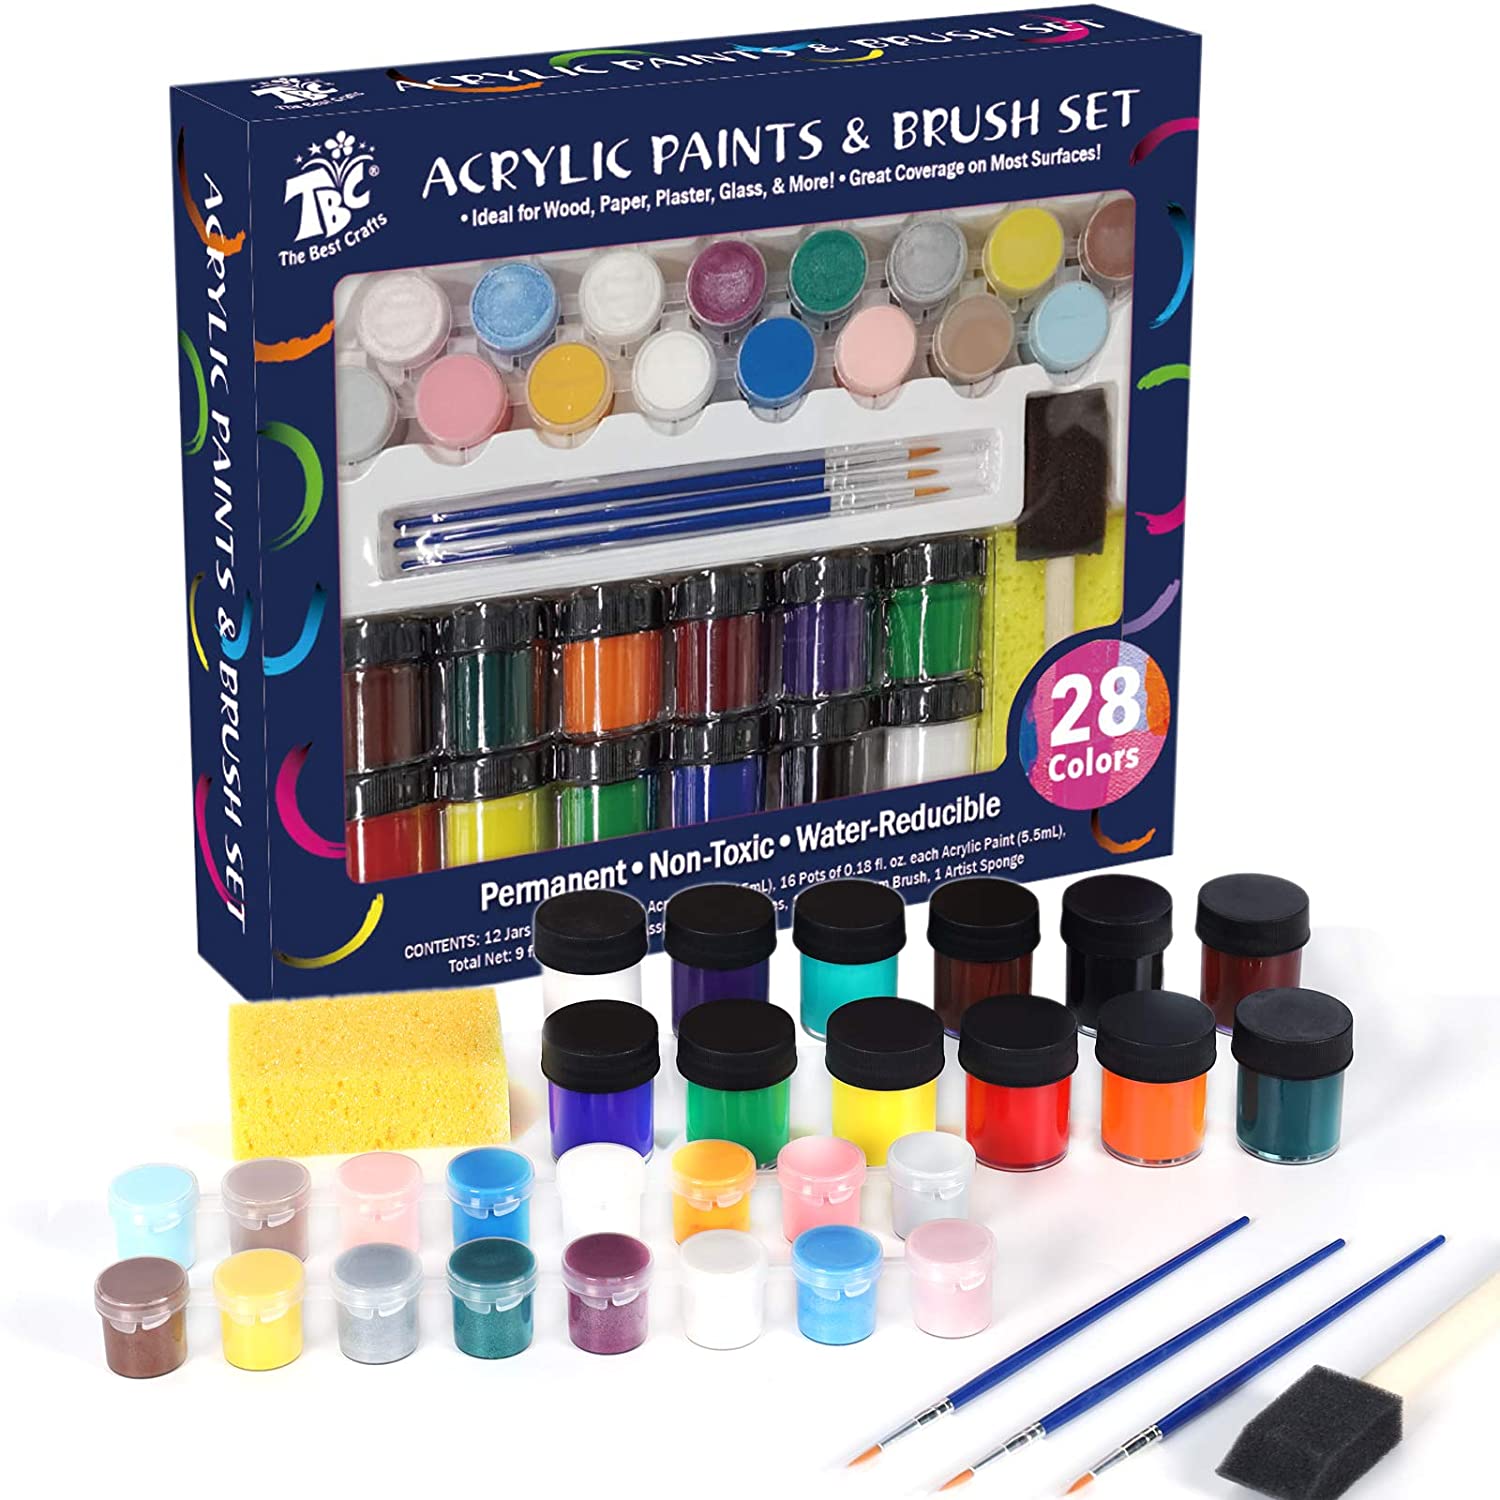  Nlapldy Airbrush Paint, 28 Colors Airbrush Paint Set